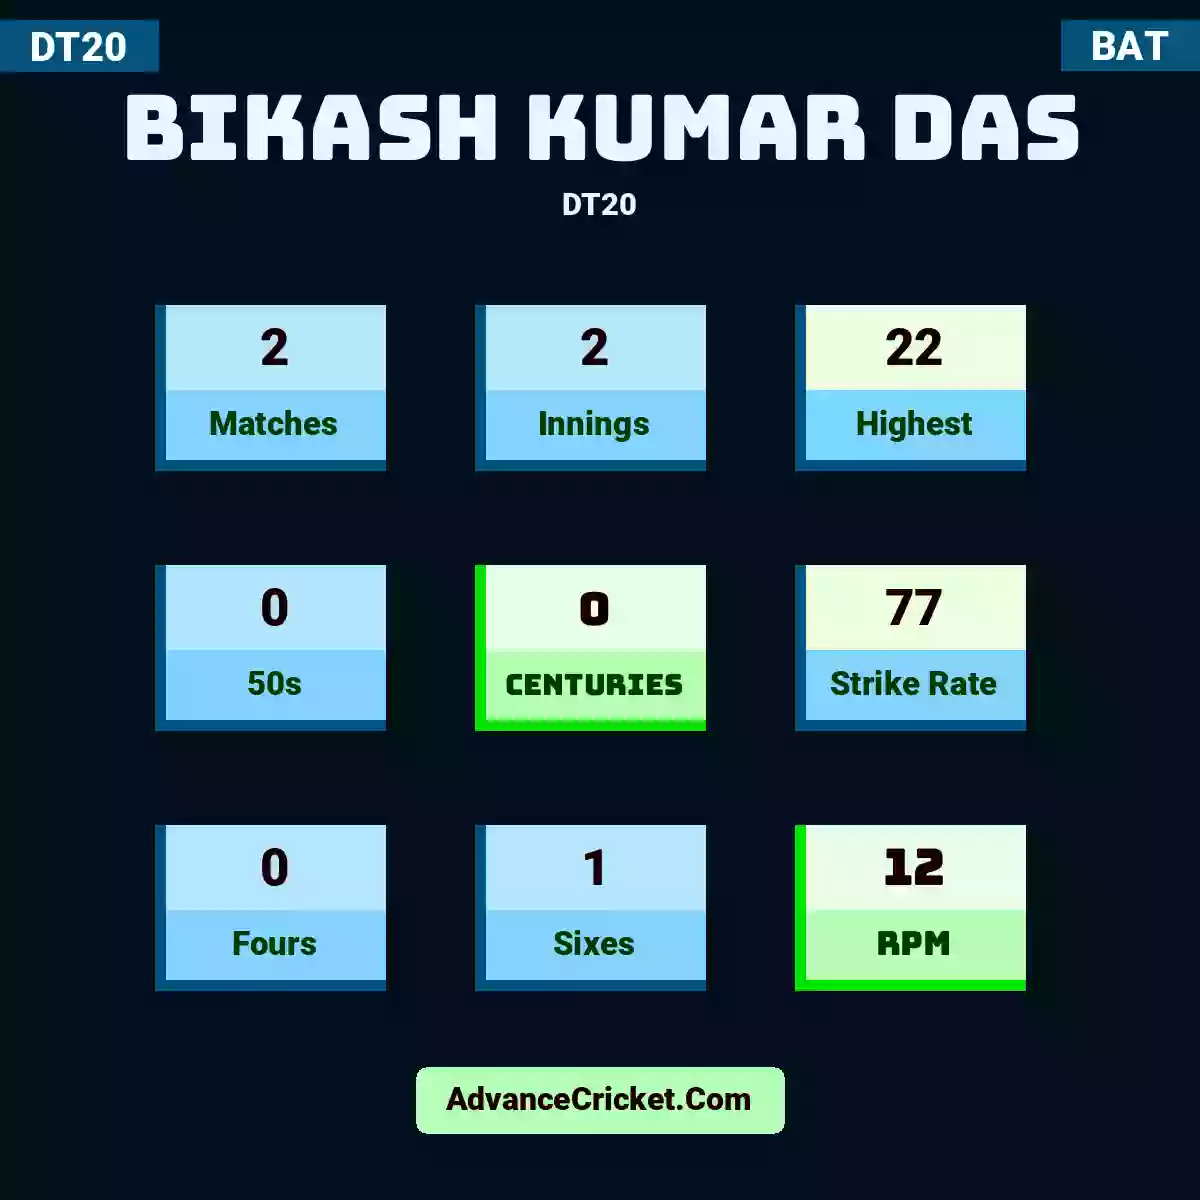 Bikash Kumar Das DT20 , Bikash Kumar Das played 2 matches, scored 22 runs as highest, 0 half-centuries, and 0 centuries, with a strike rate of 77. B.Das hit 0 fours and 1 sixes, with an RPM of 12.